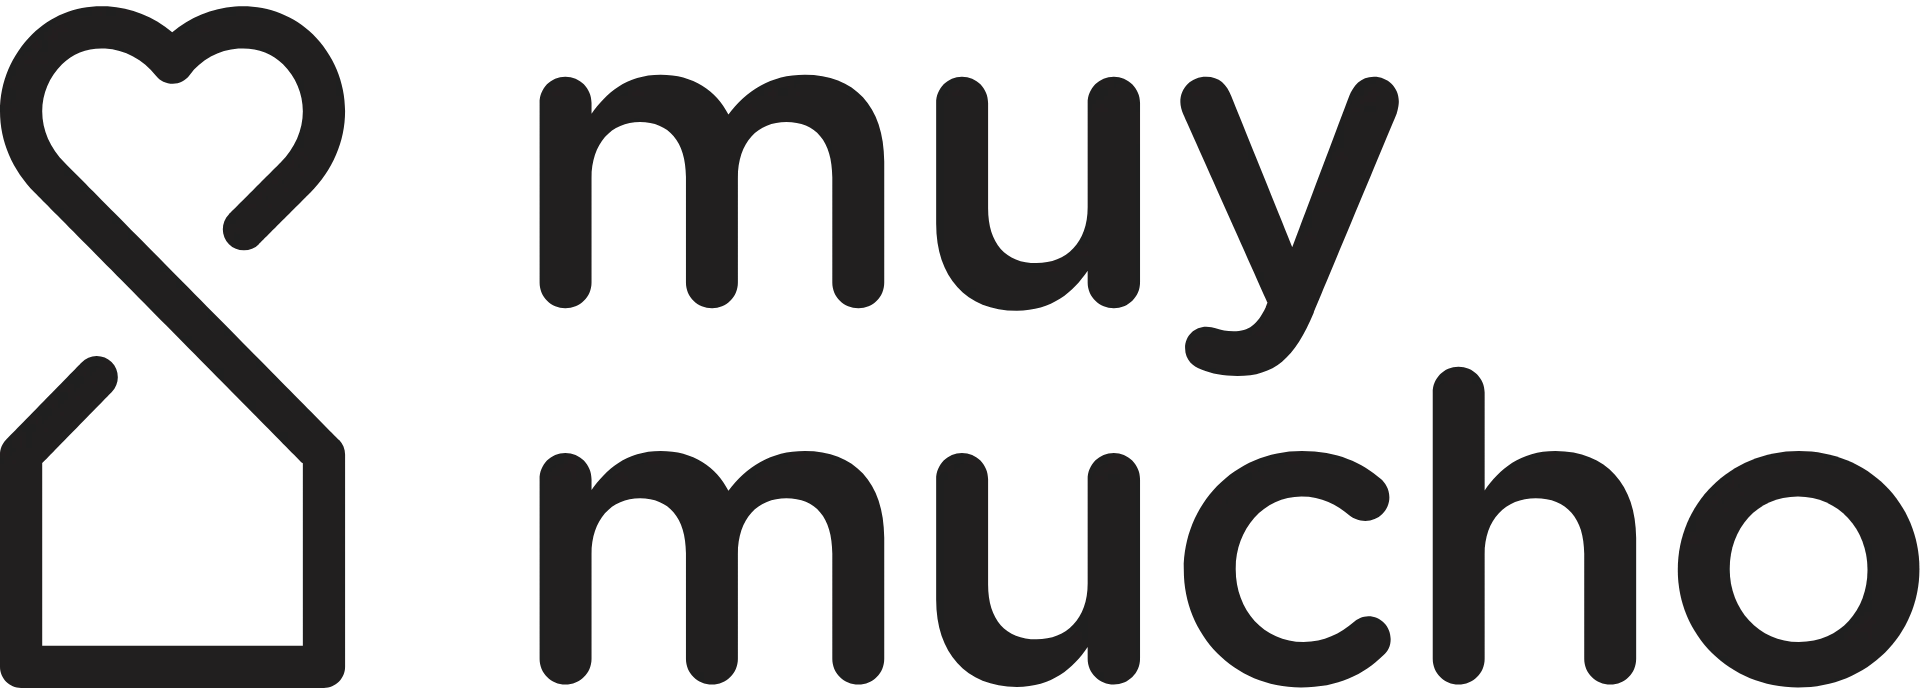 MUY MUCHO logo